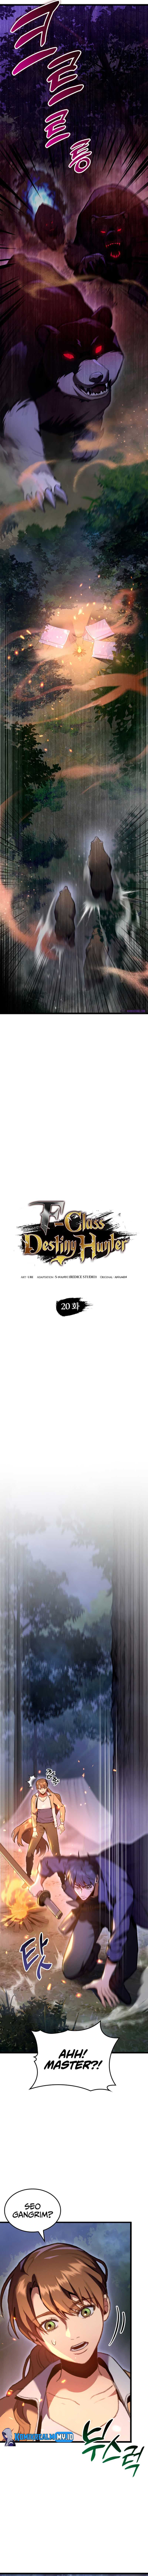 F-Class Destiny Hunter (F-Class Fortune Hunter) Chapter 20